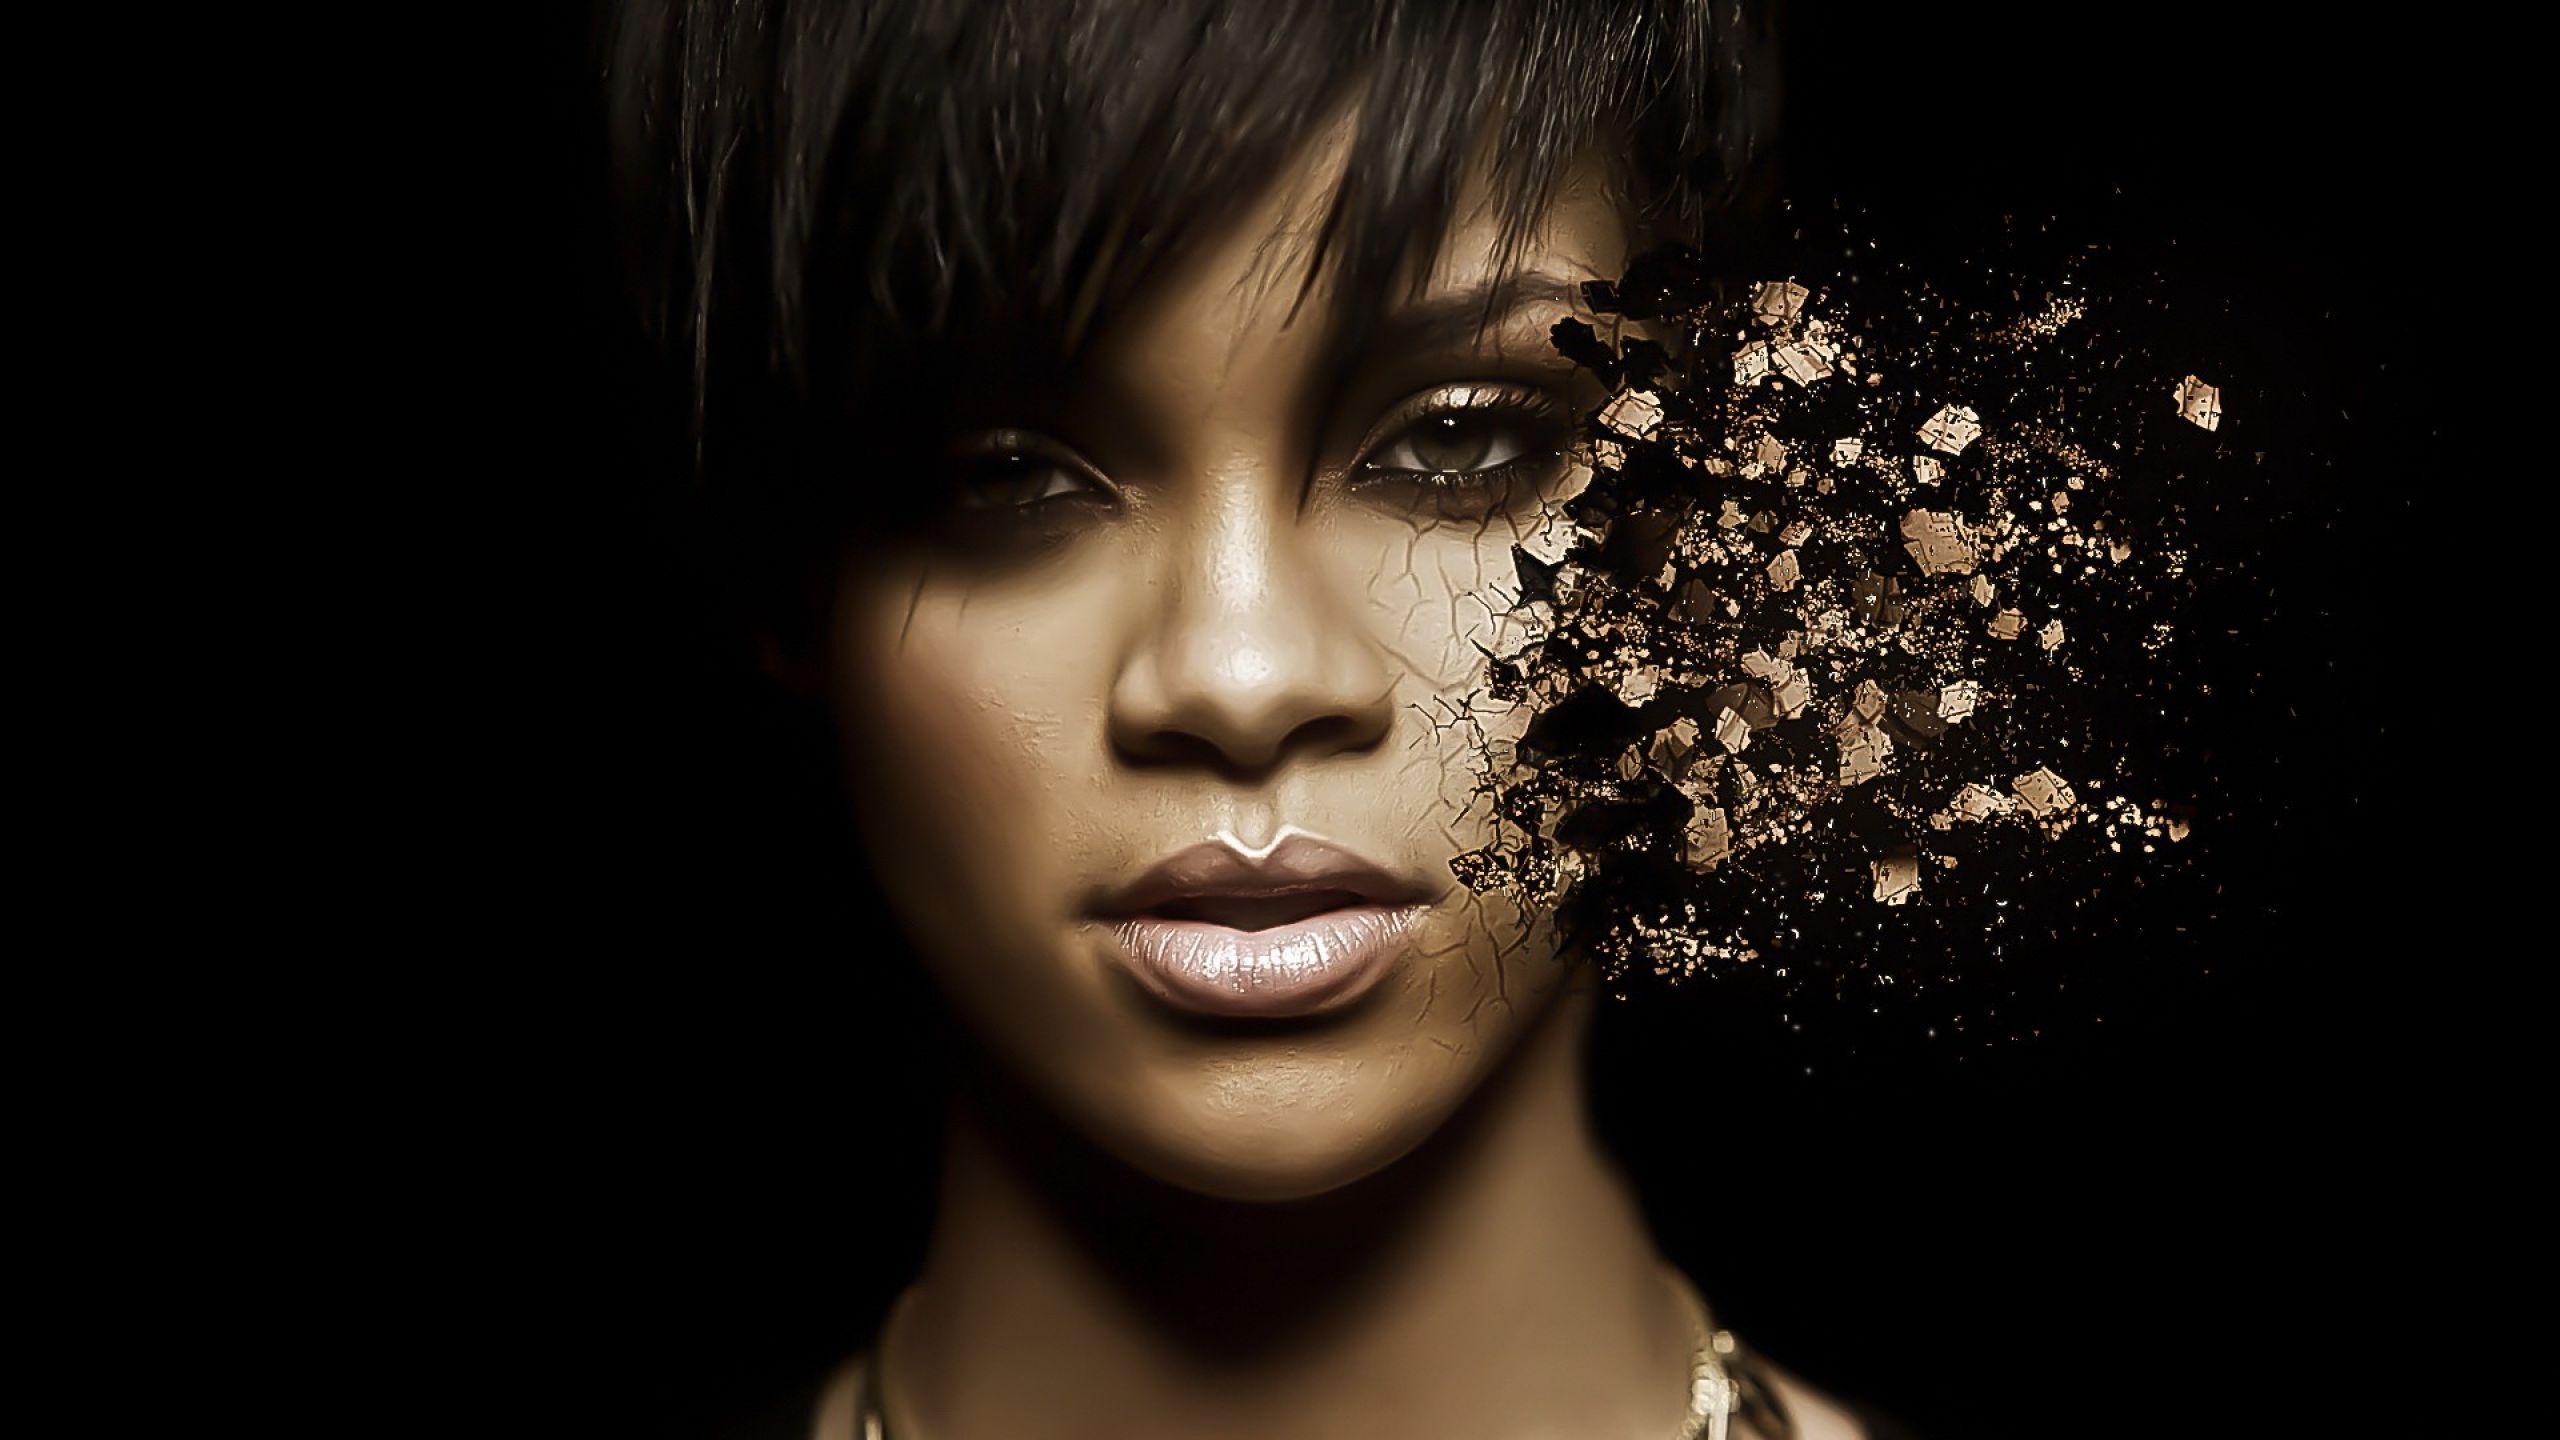 Rihanna Background Wallpaper High Definition Quality